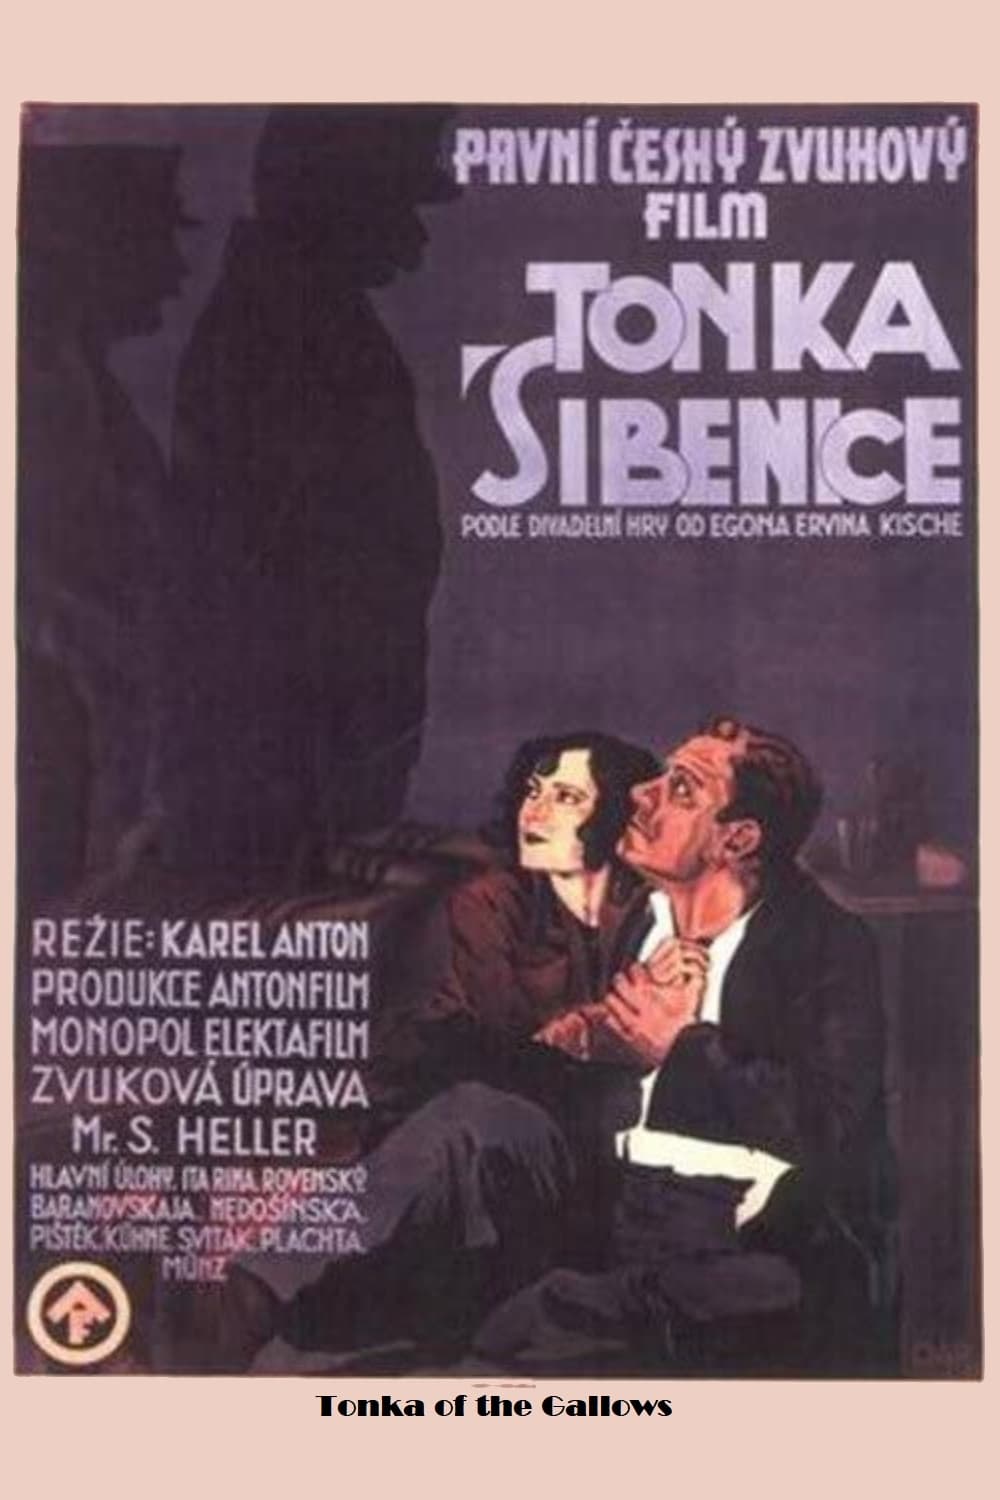 Tonka of the Gallows (1930)